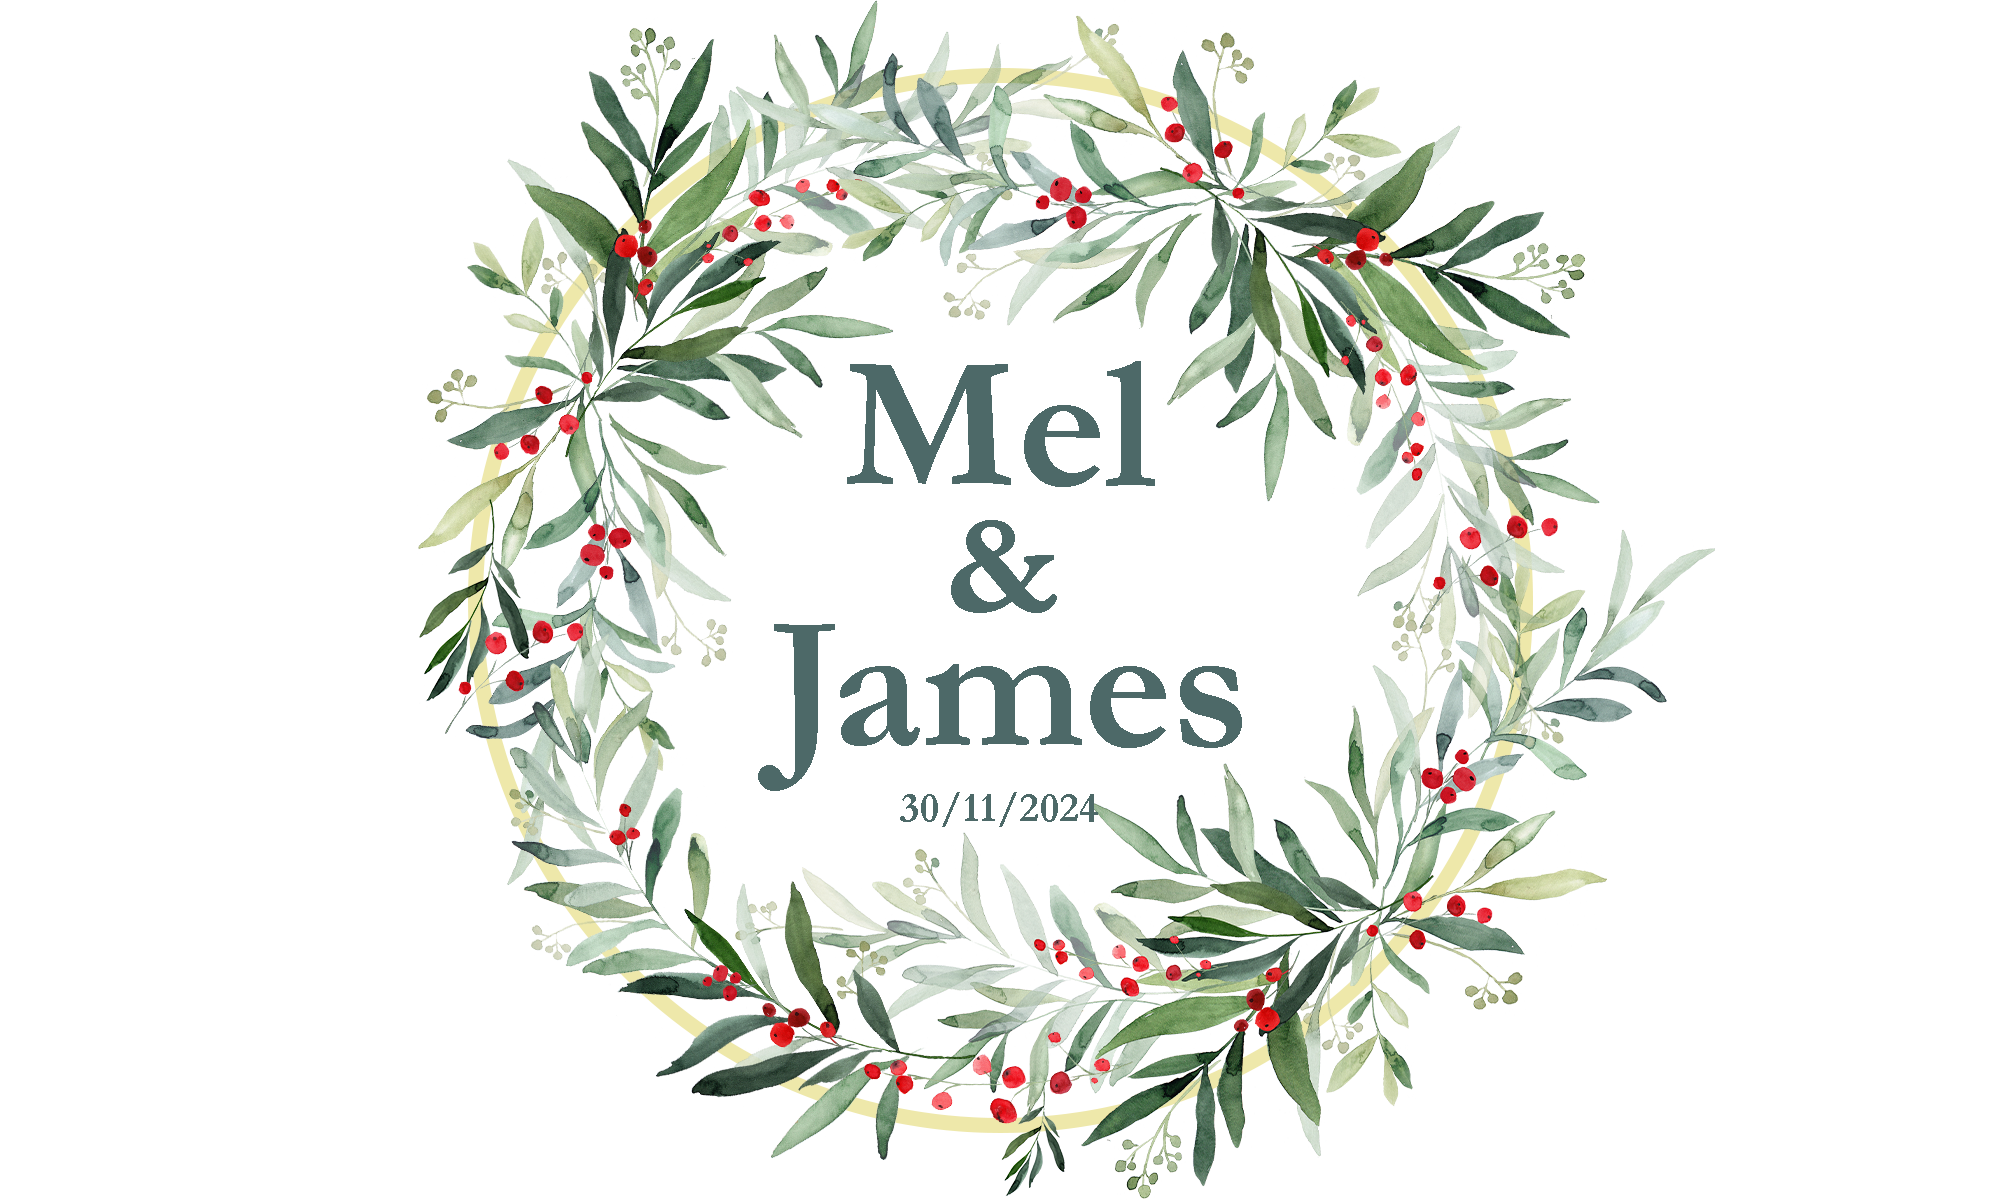 Mel & James 30/11/2024